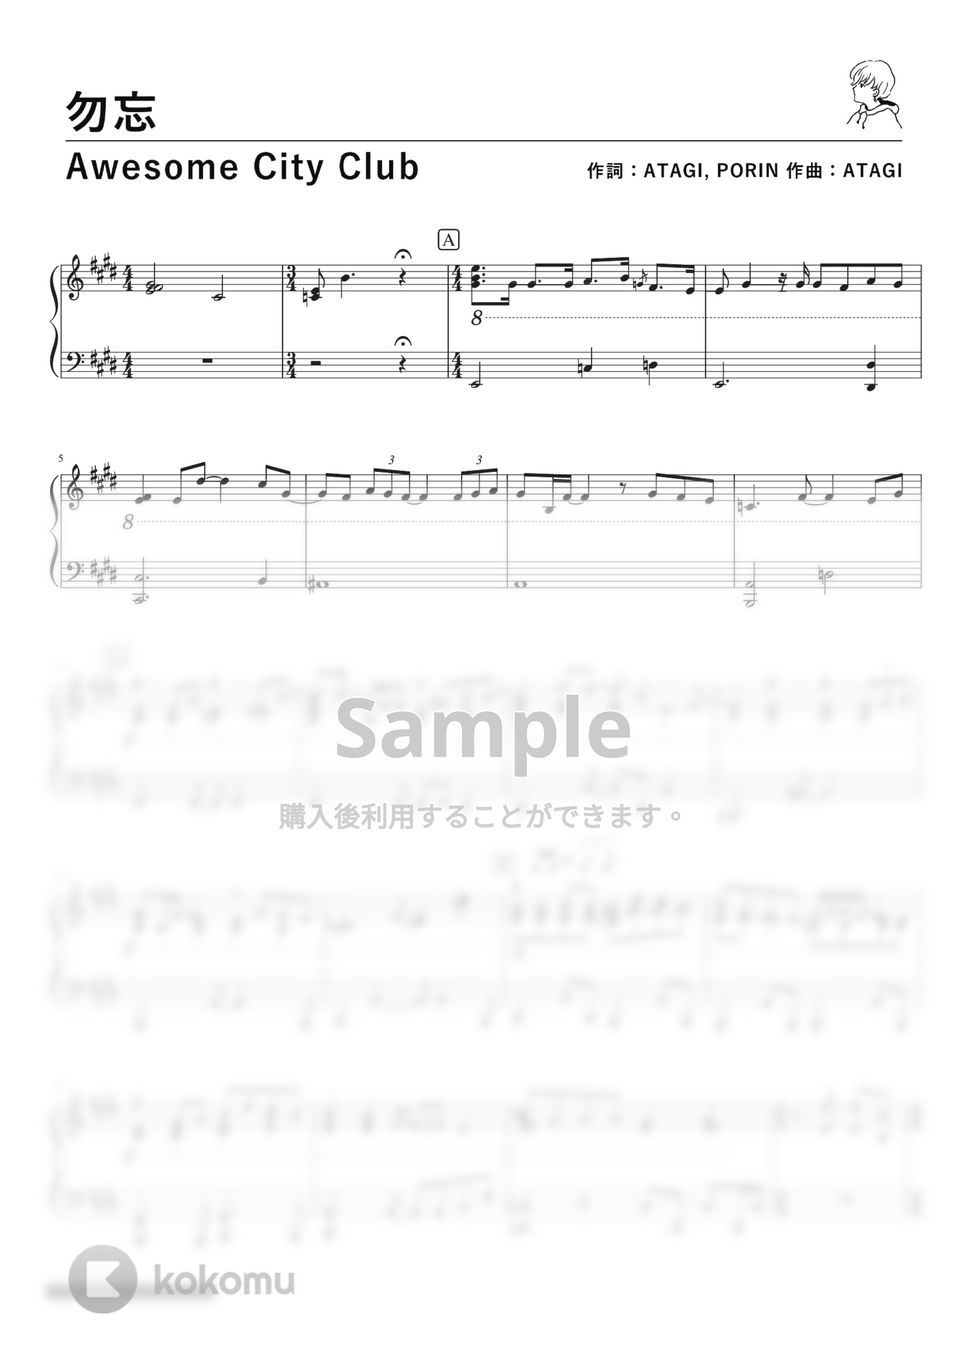 Awesome City Club - 勿忘 (PianoSolo) by 深根 / Fukane